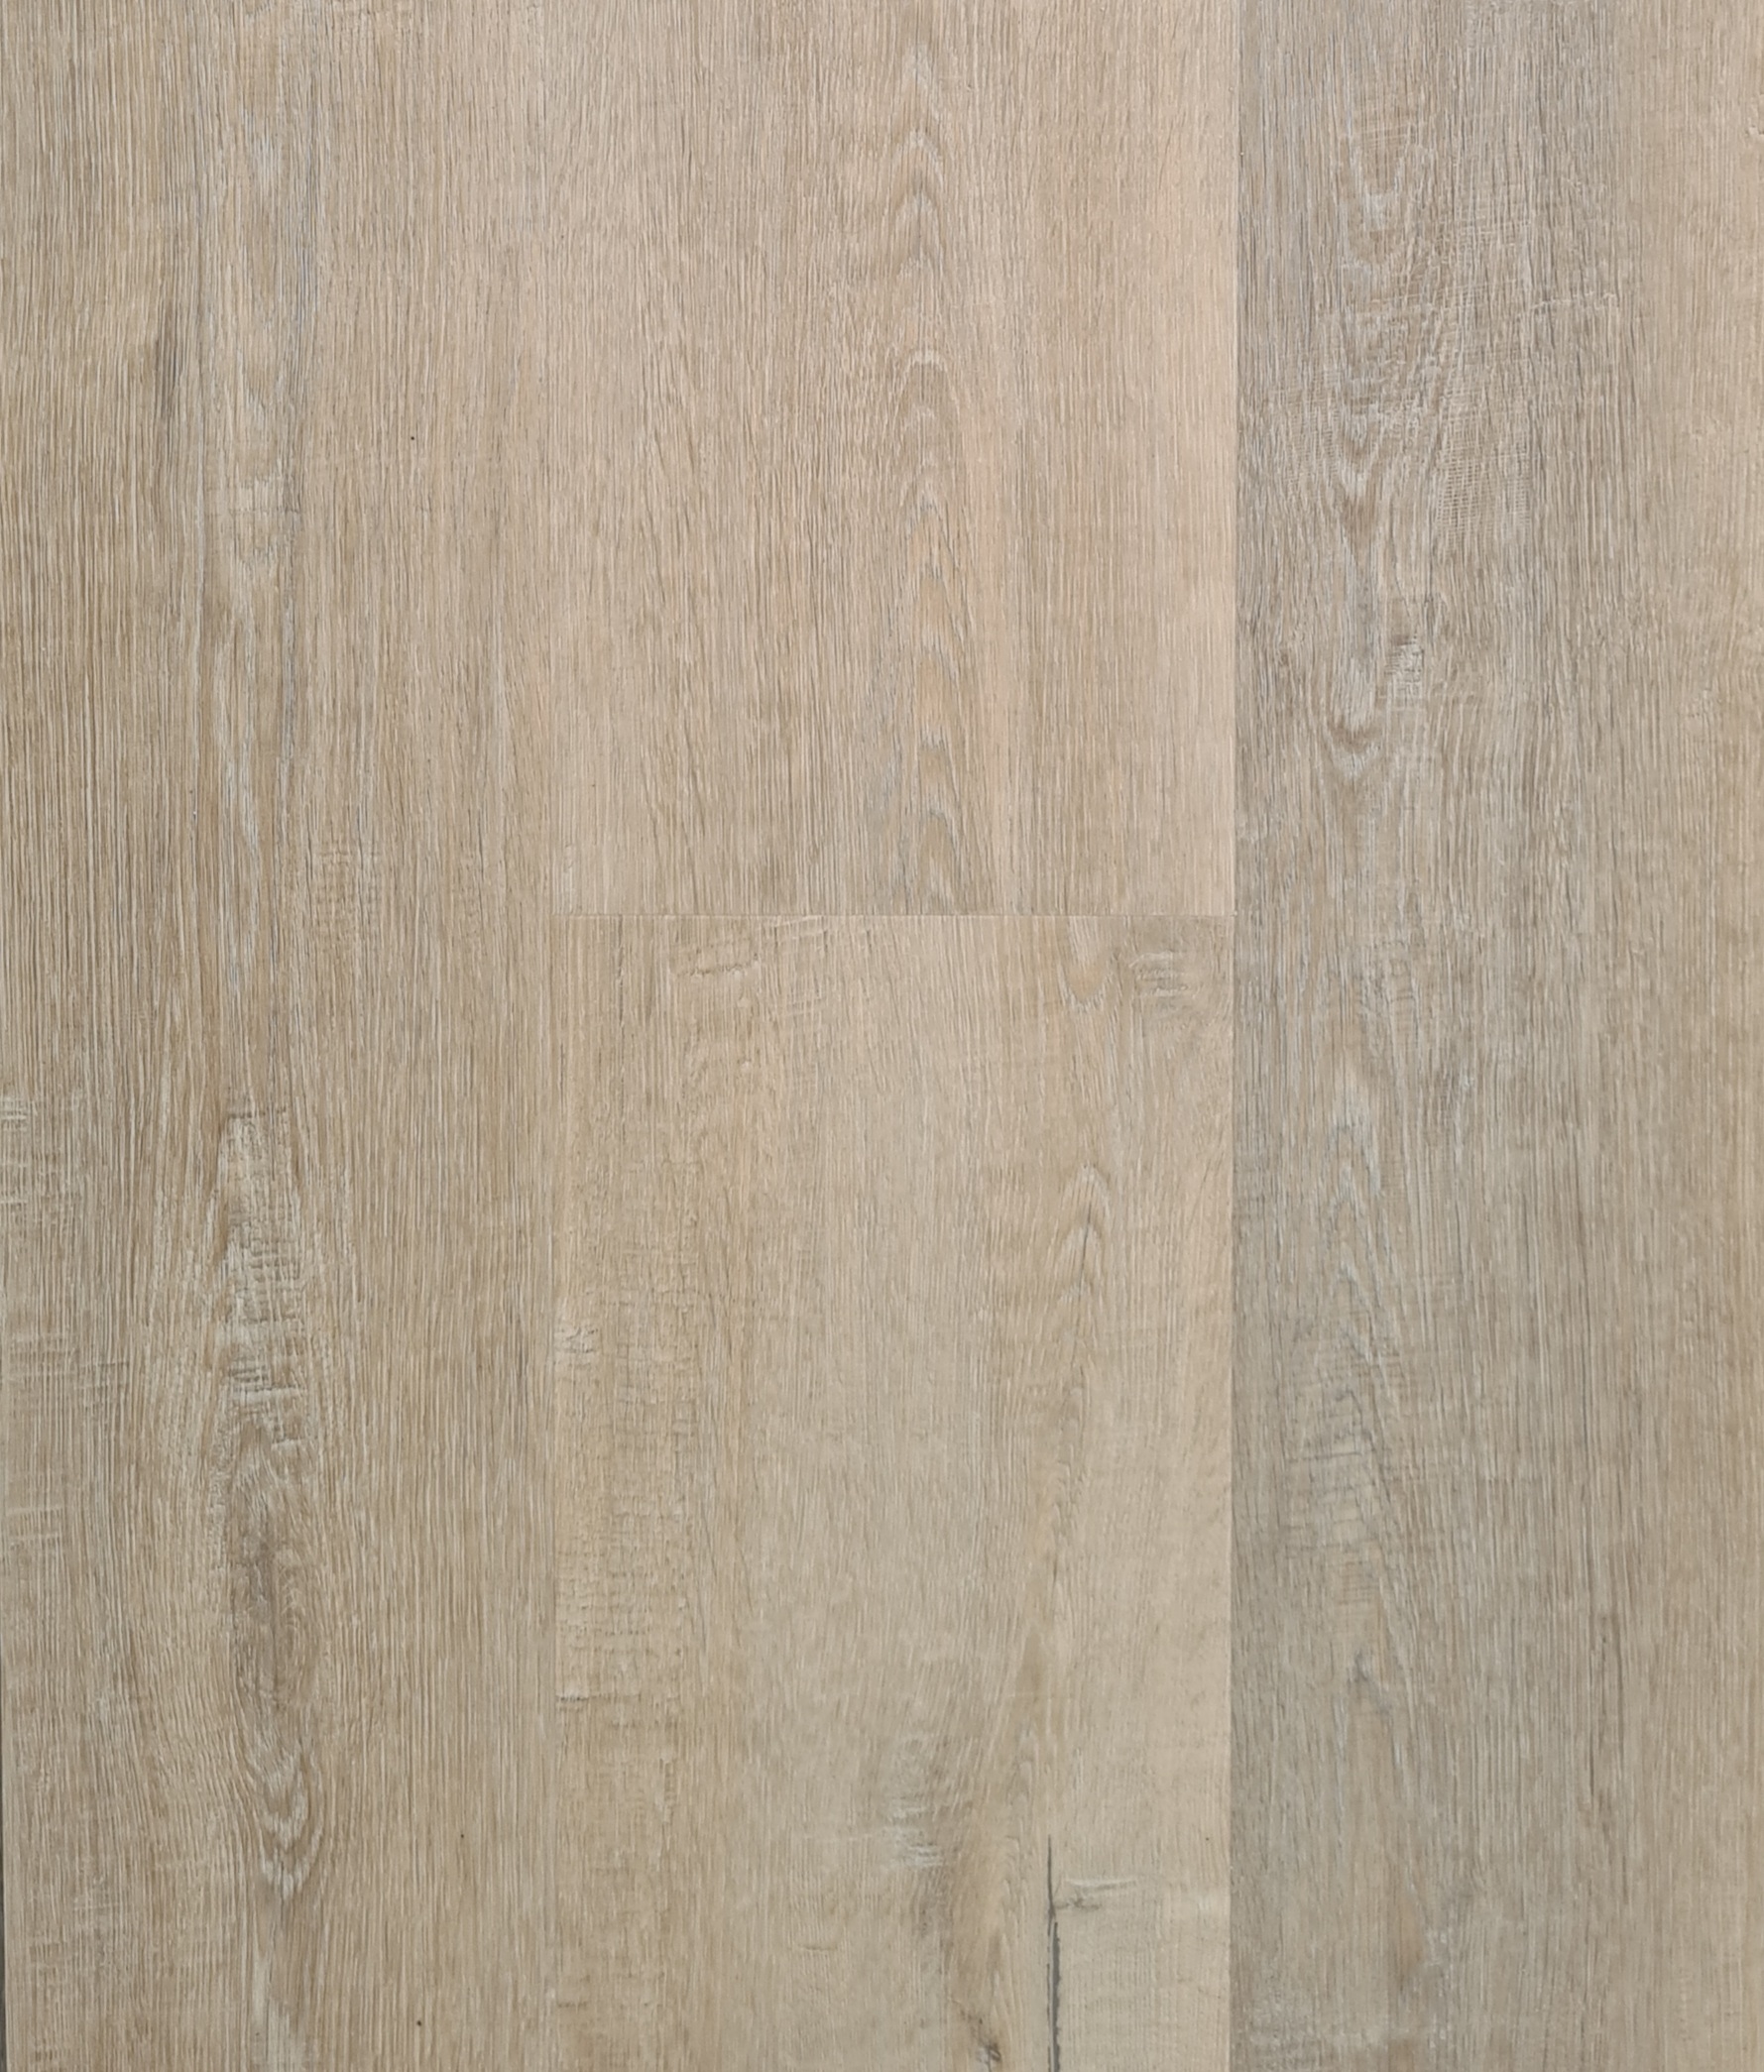 Blonde Royal Oak Hybrid Flooring